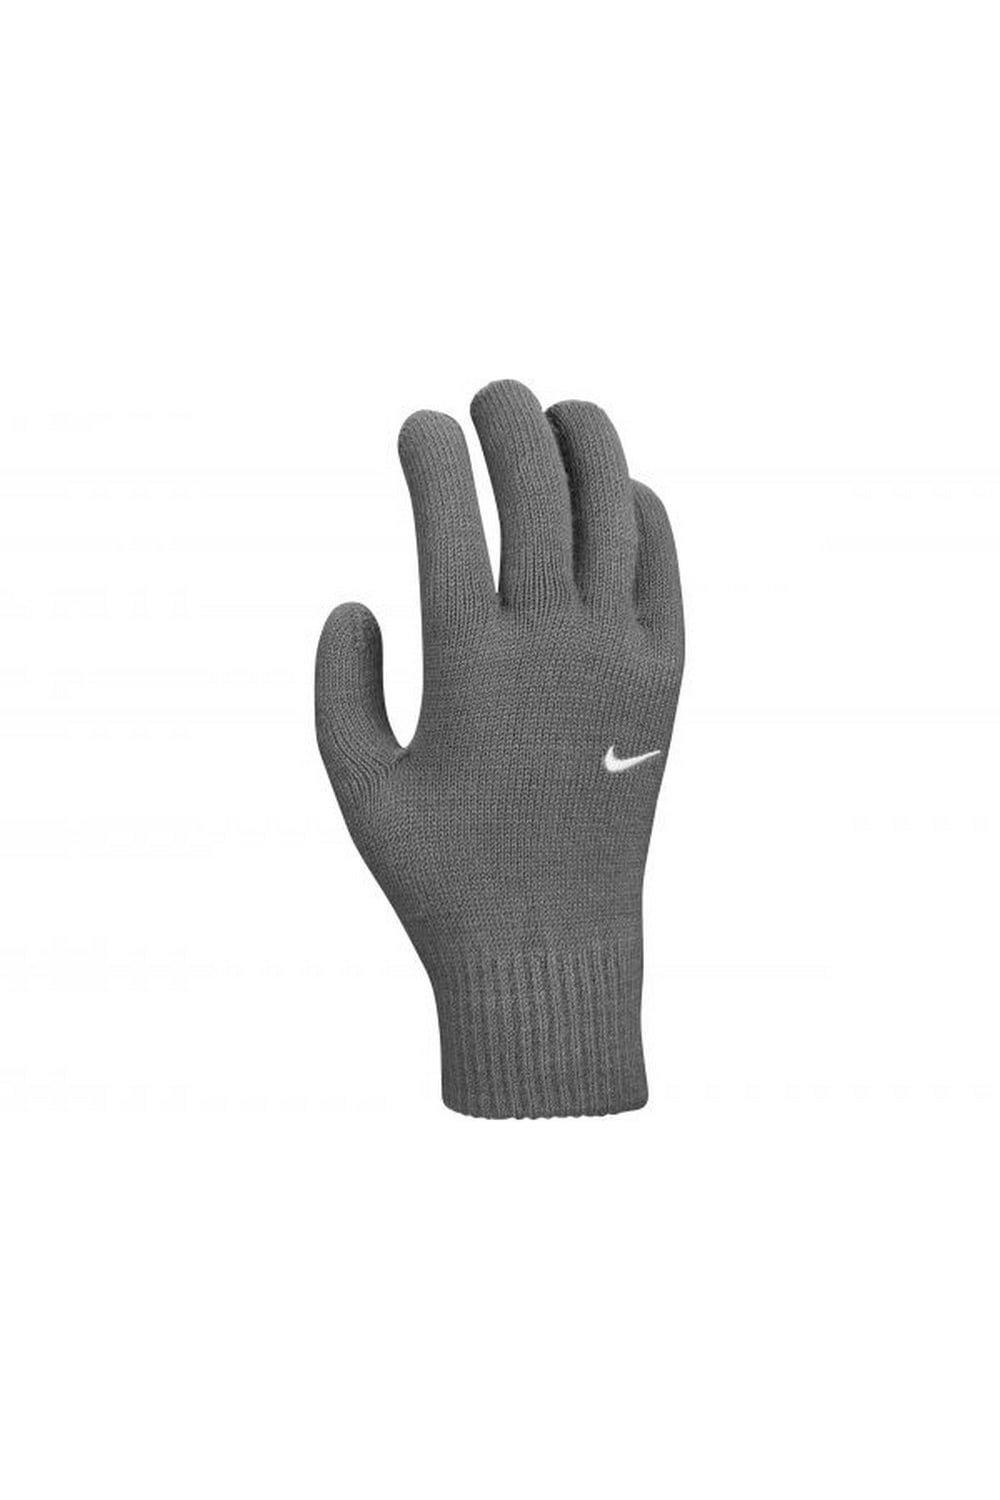 Вязаные перчатки-галочки Nike, серый галочка серая